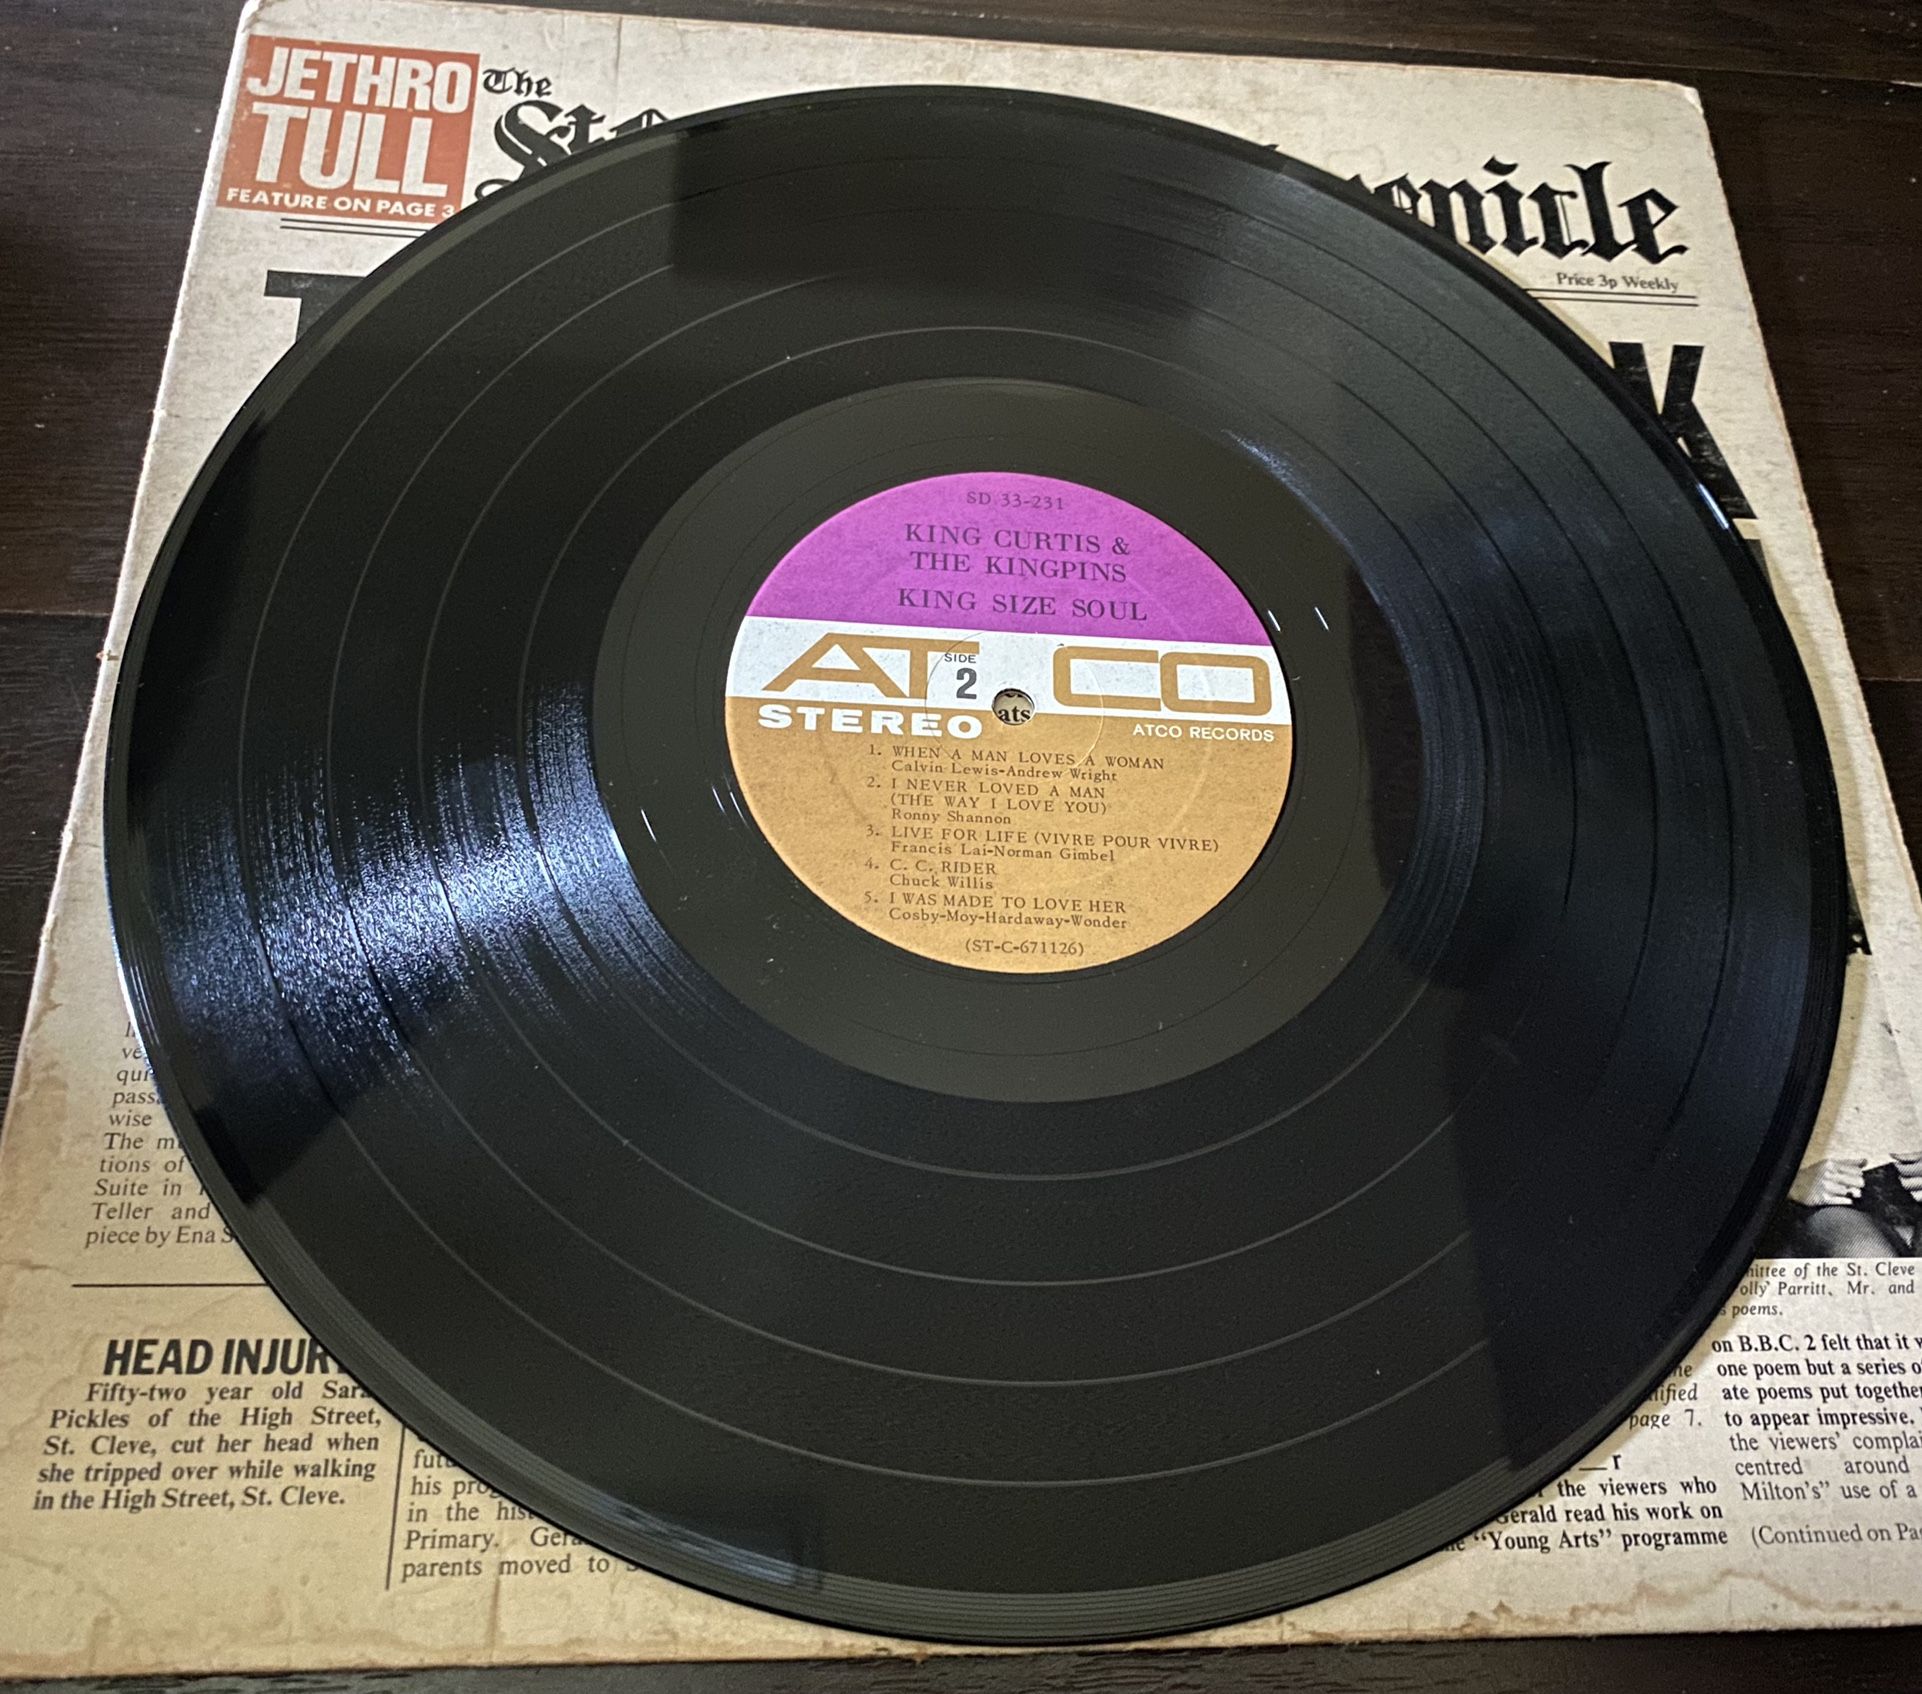 1967 KING CURTIS AND THE KINGPINS - KING SIZE SOUL VINYL LP RECORD ALBUM Vintage